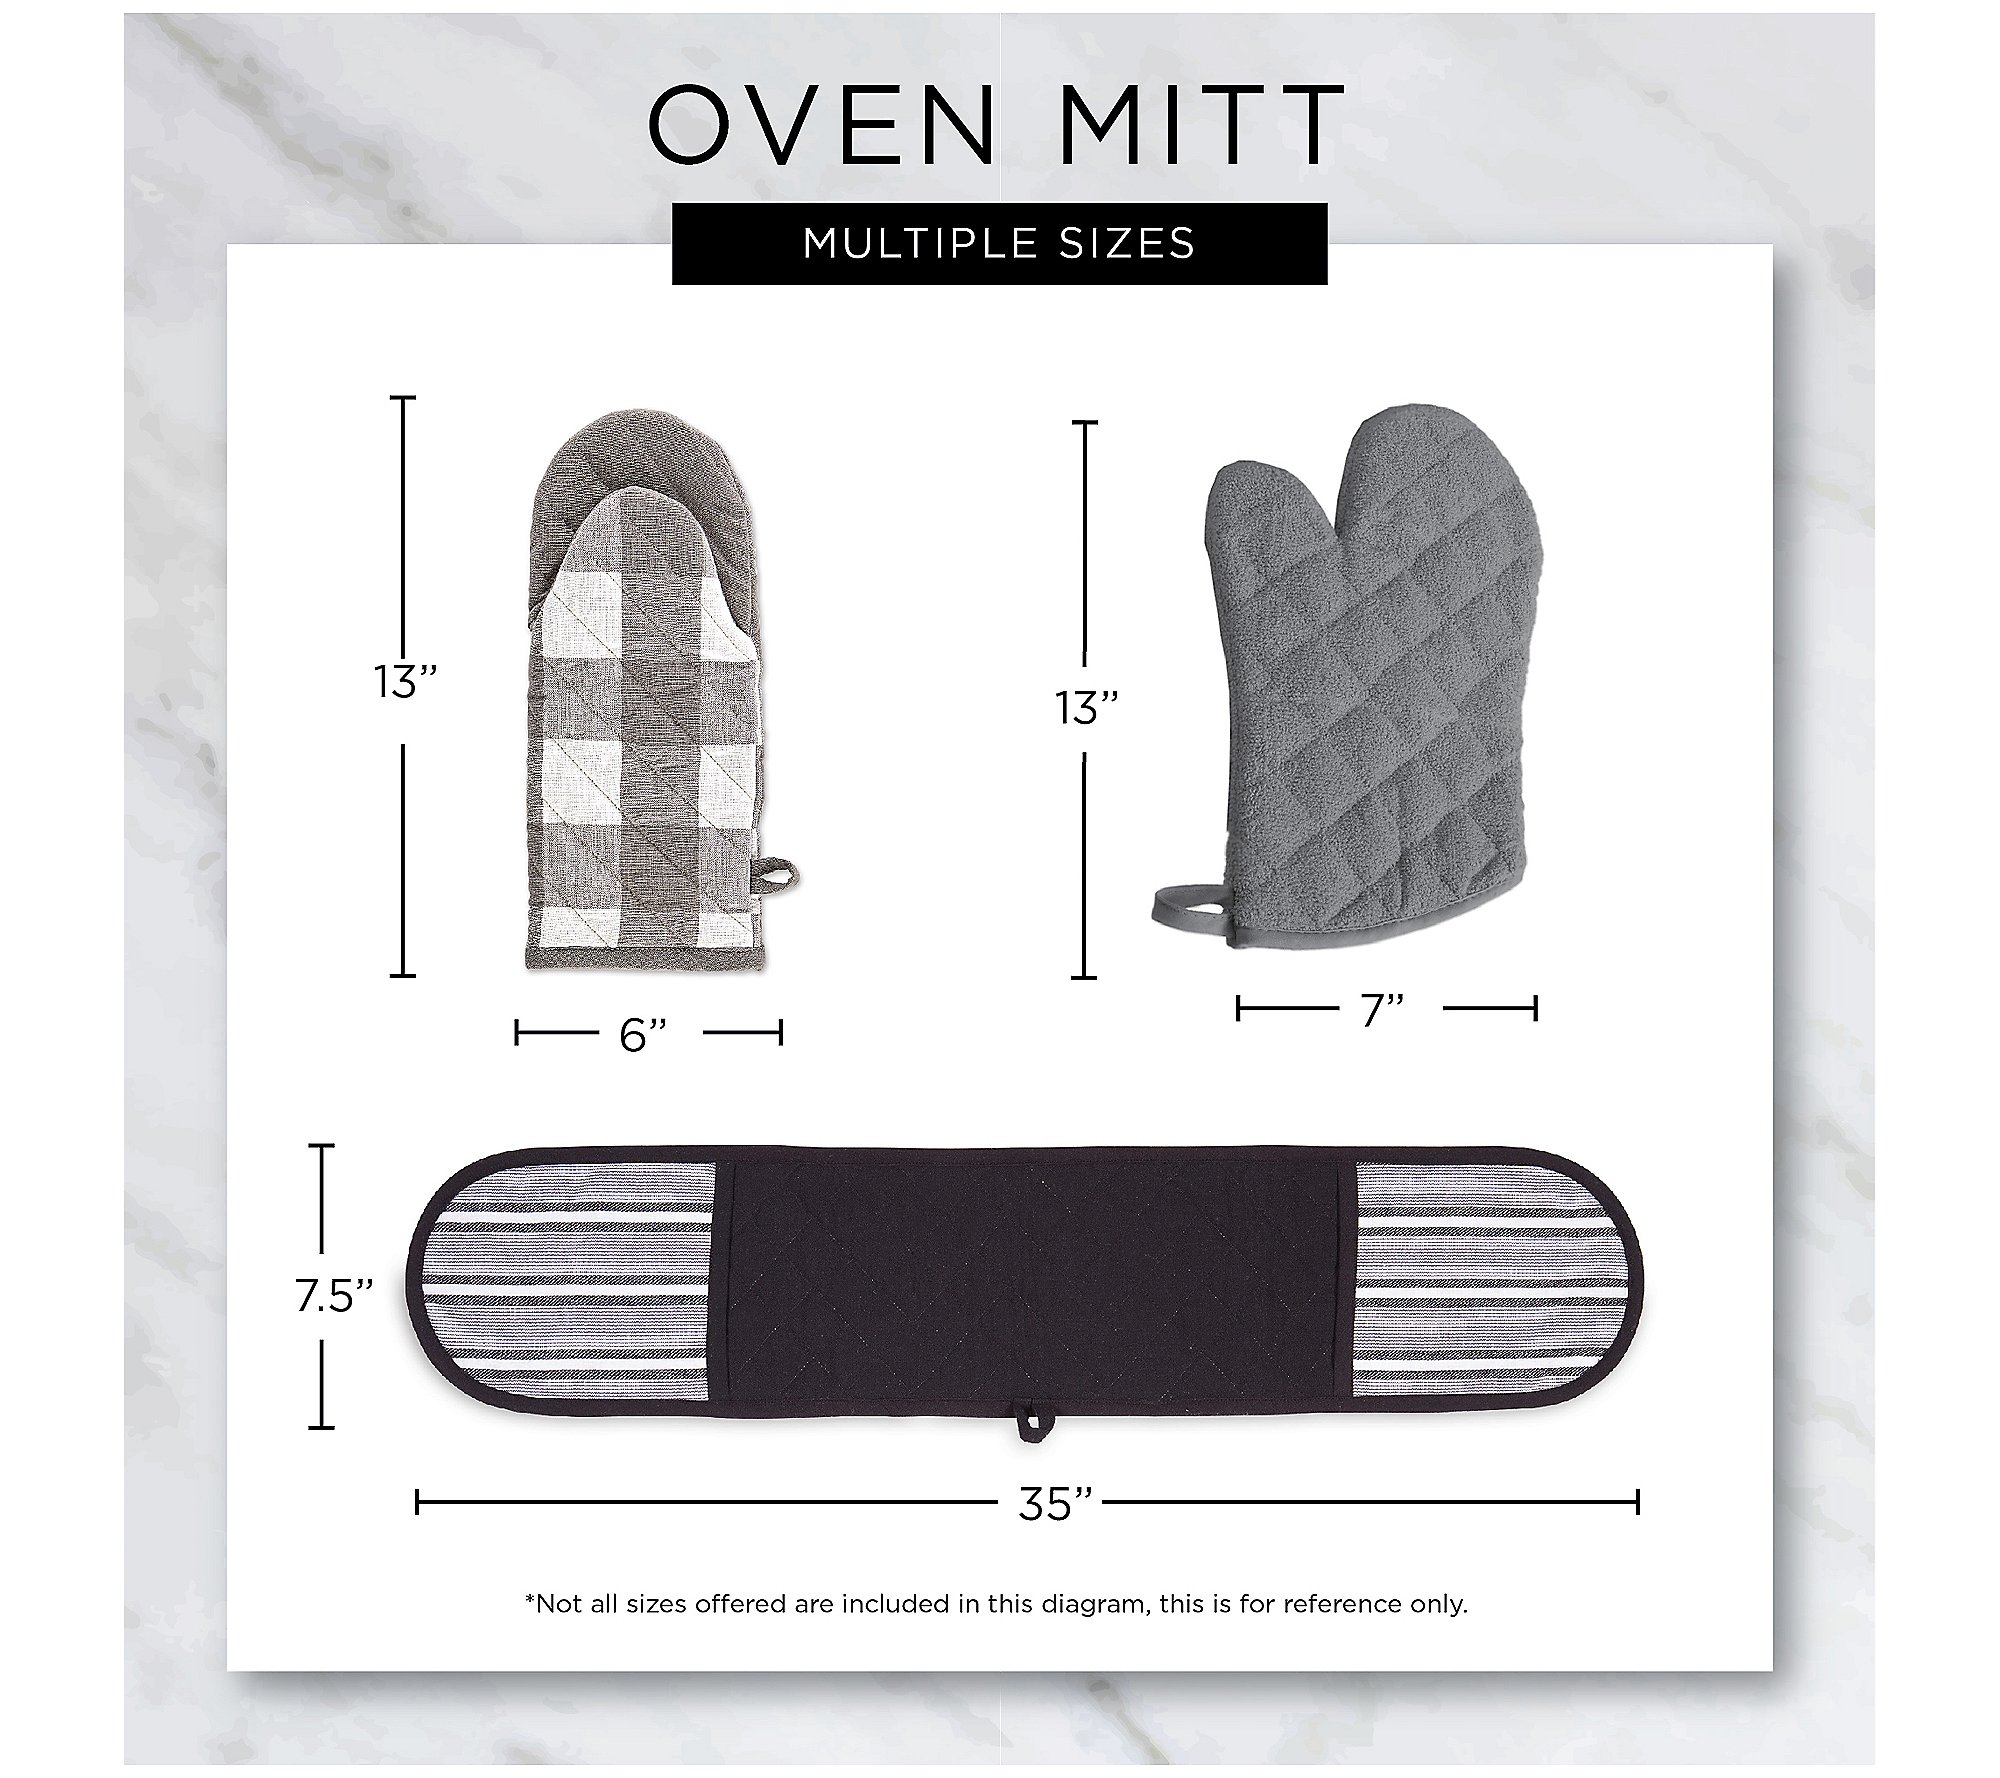 Design Imports Basic Witch Oven Mitt and Potholder Gift Set